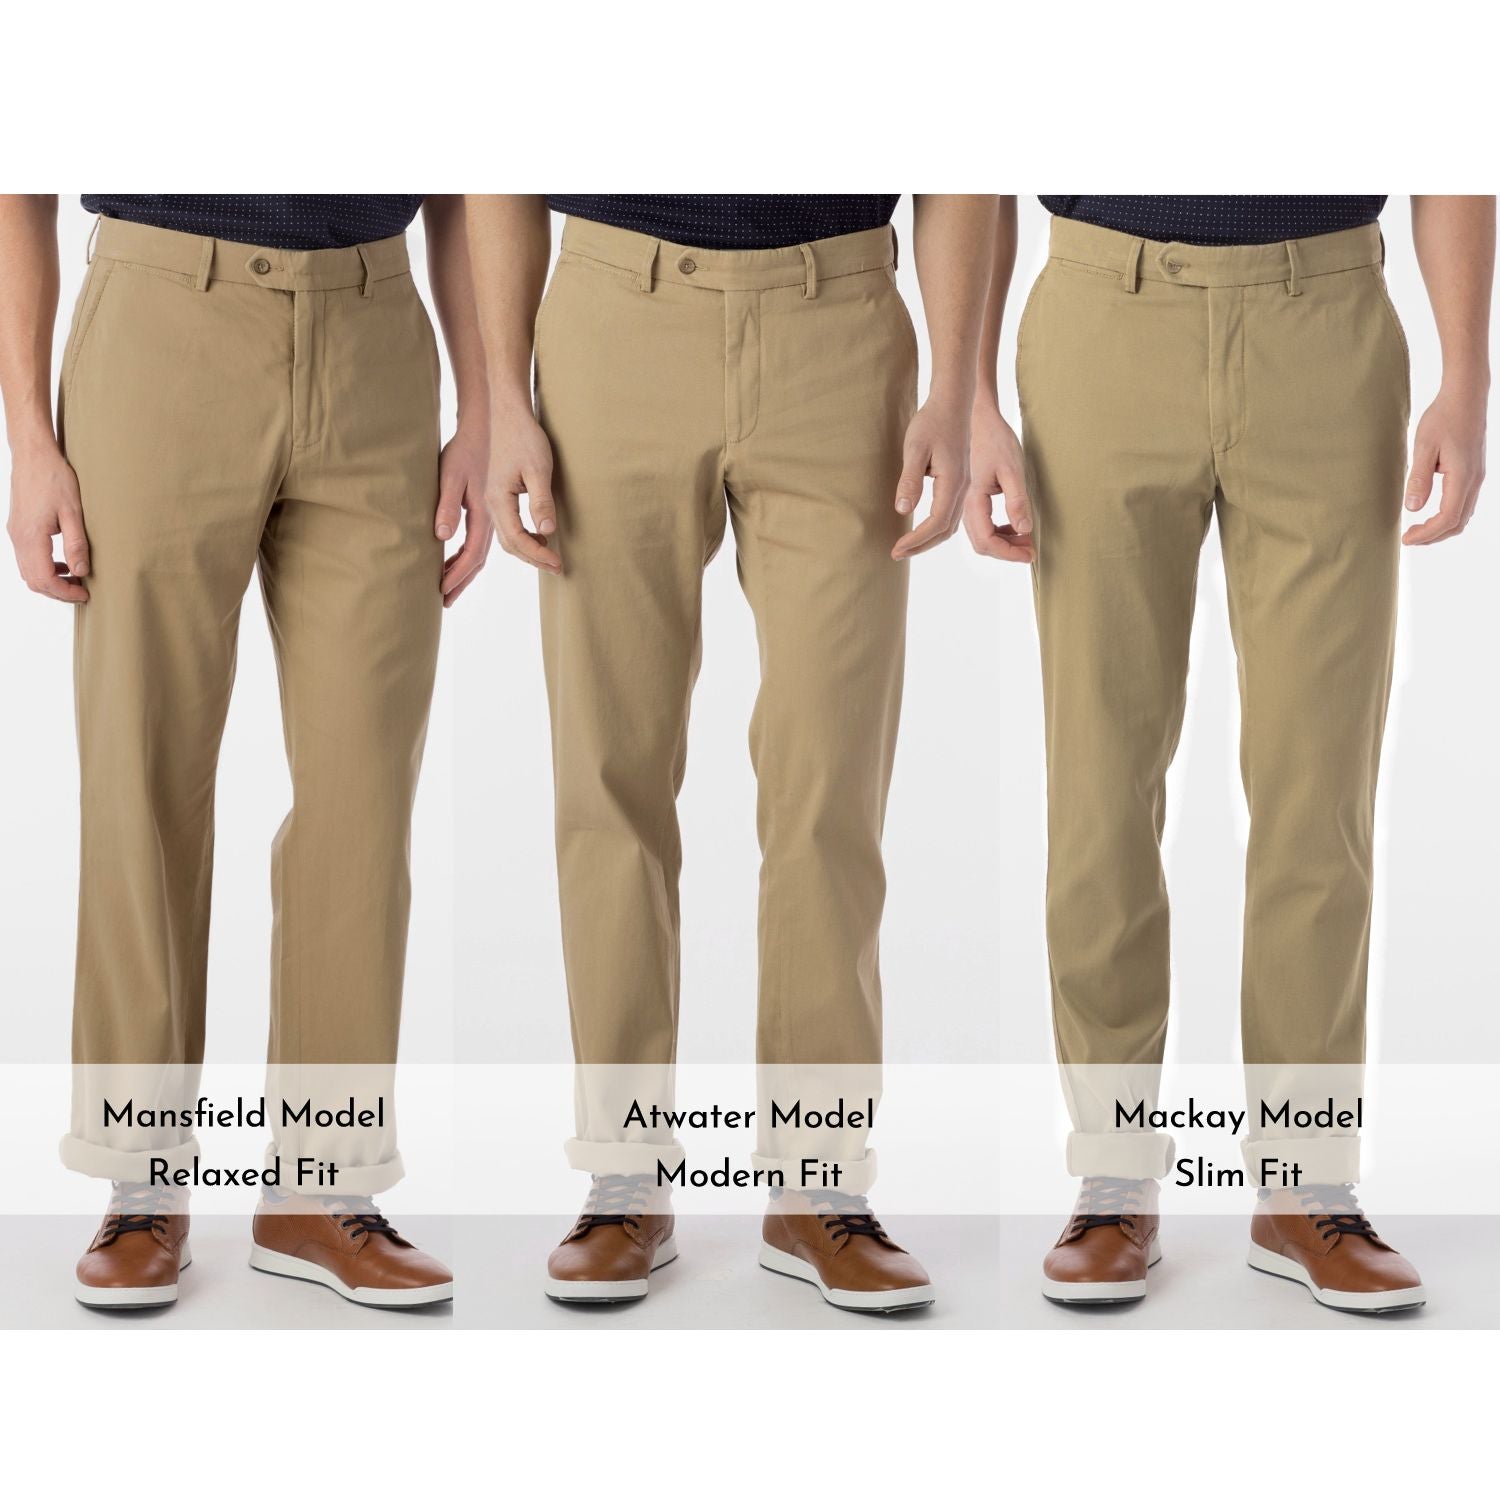 Perma Color Pima Twill Khaki Pants in Khaki (Flat Front Models) by Ballin